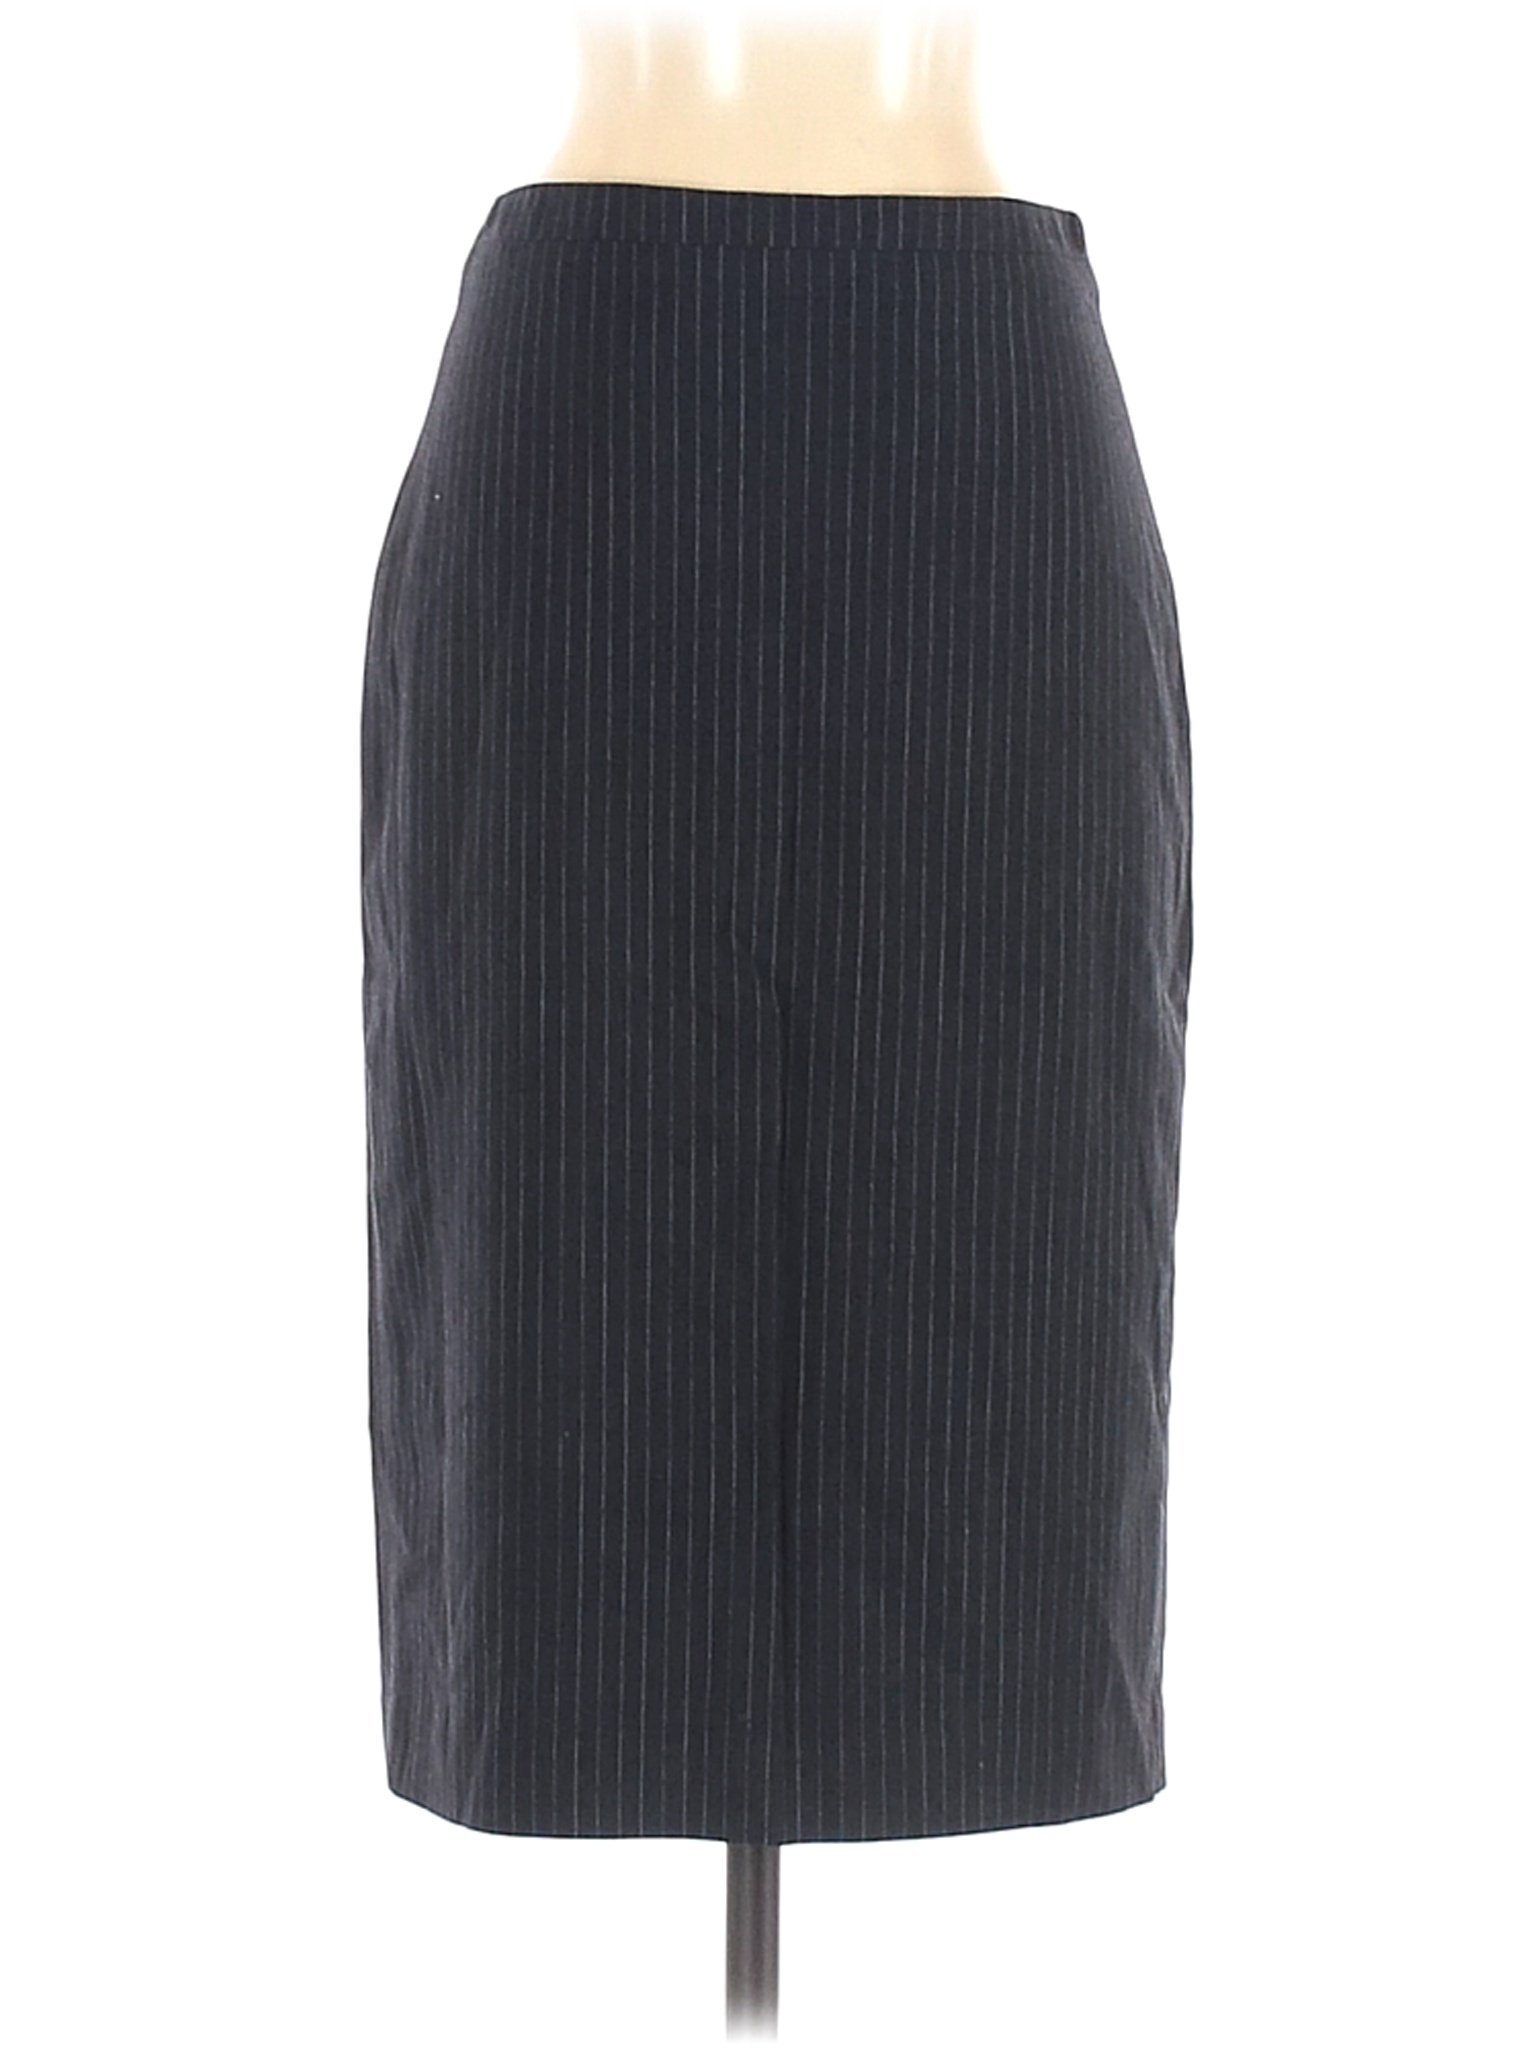 Banana Republic Stripes Black Wool Skirt Size 0 - 92% off | thredUP